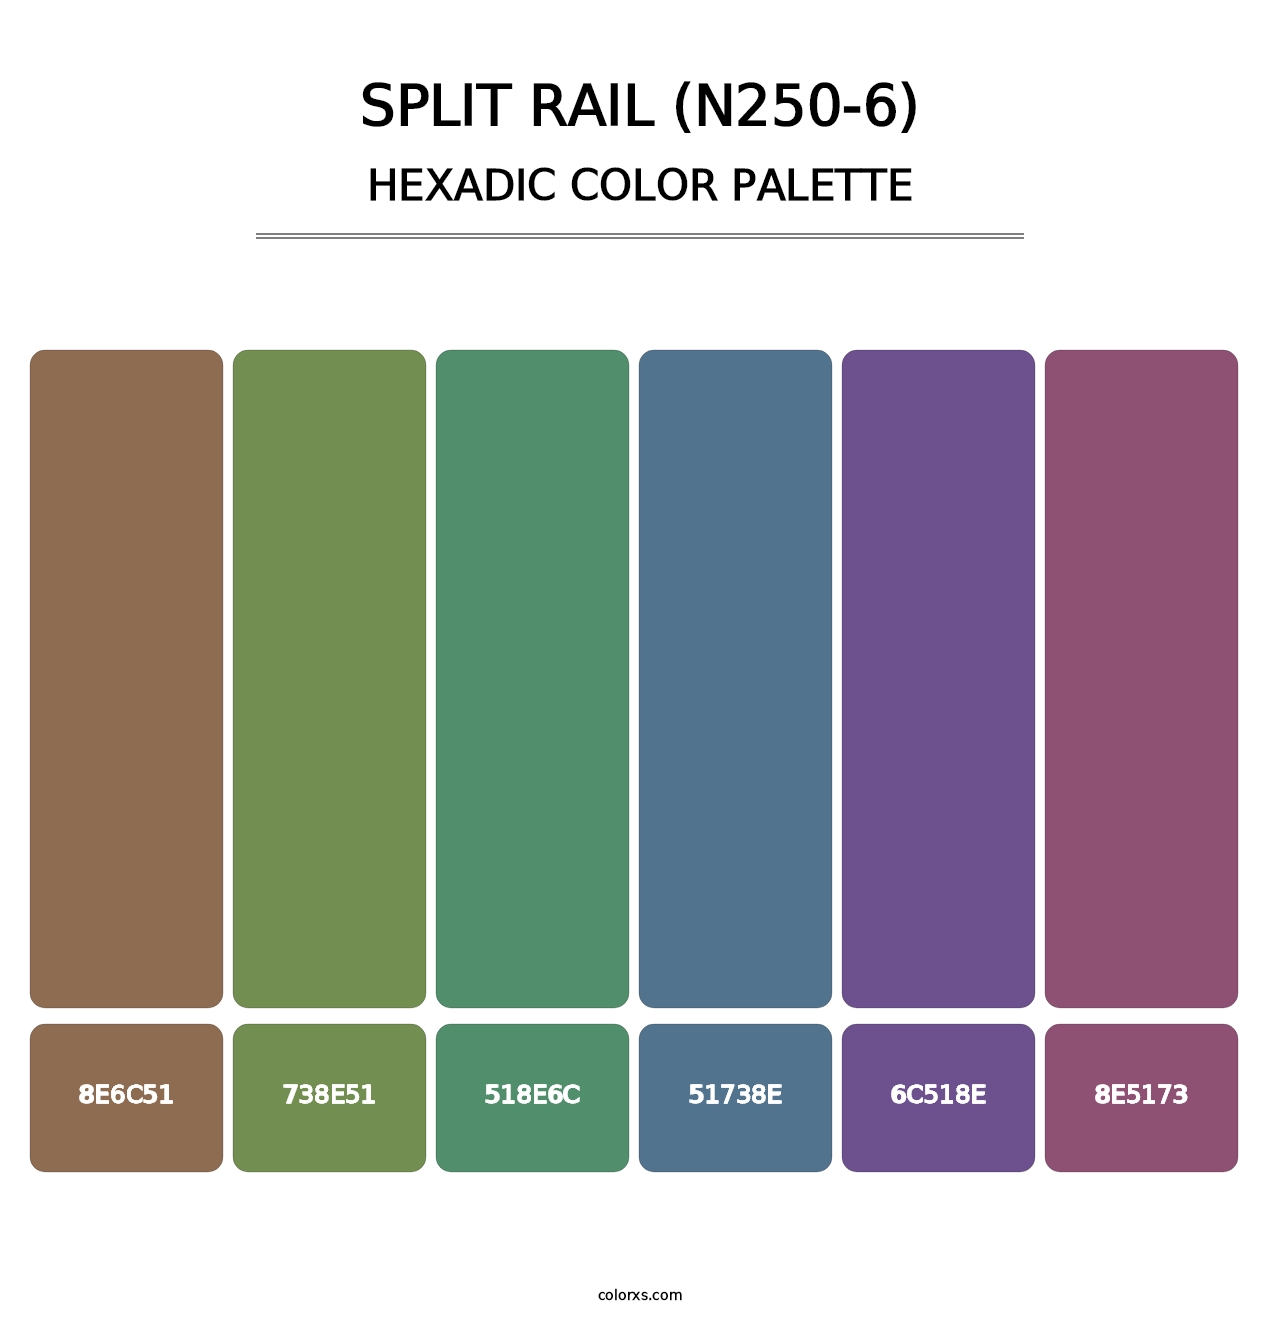 Split Rail (N250-6) - Hexadic Color Palette